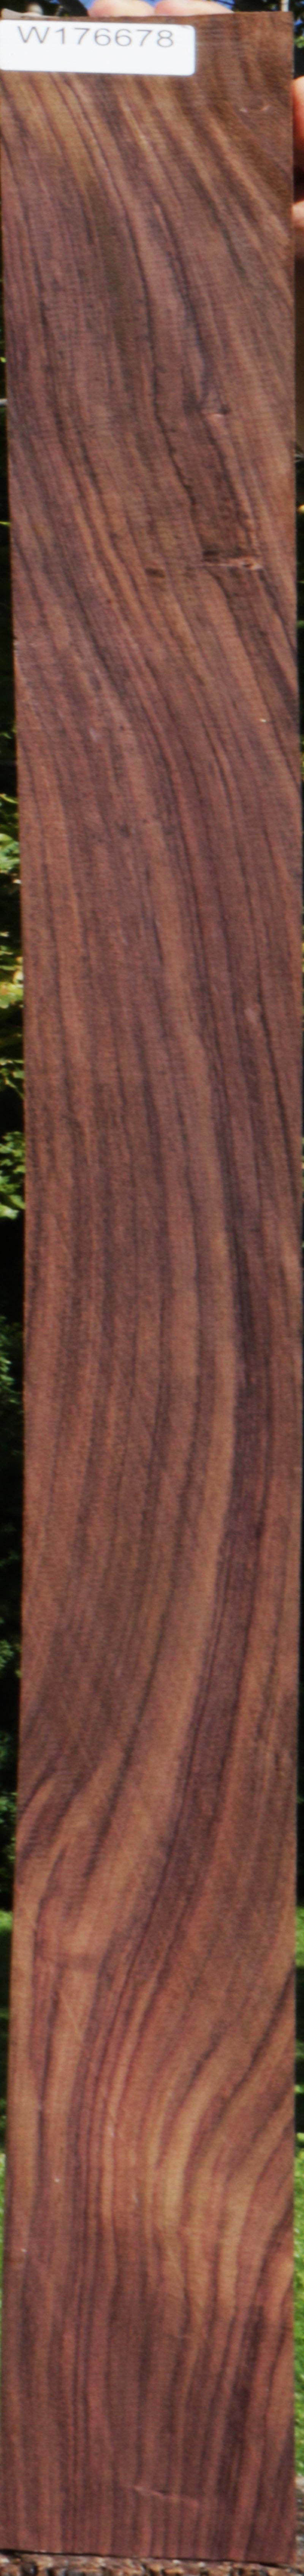 East Indian Rosewood Lumber